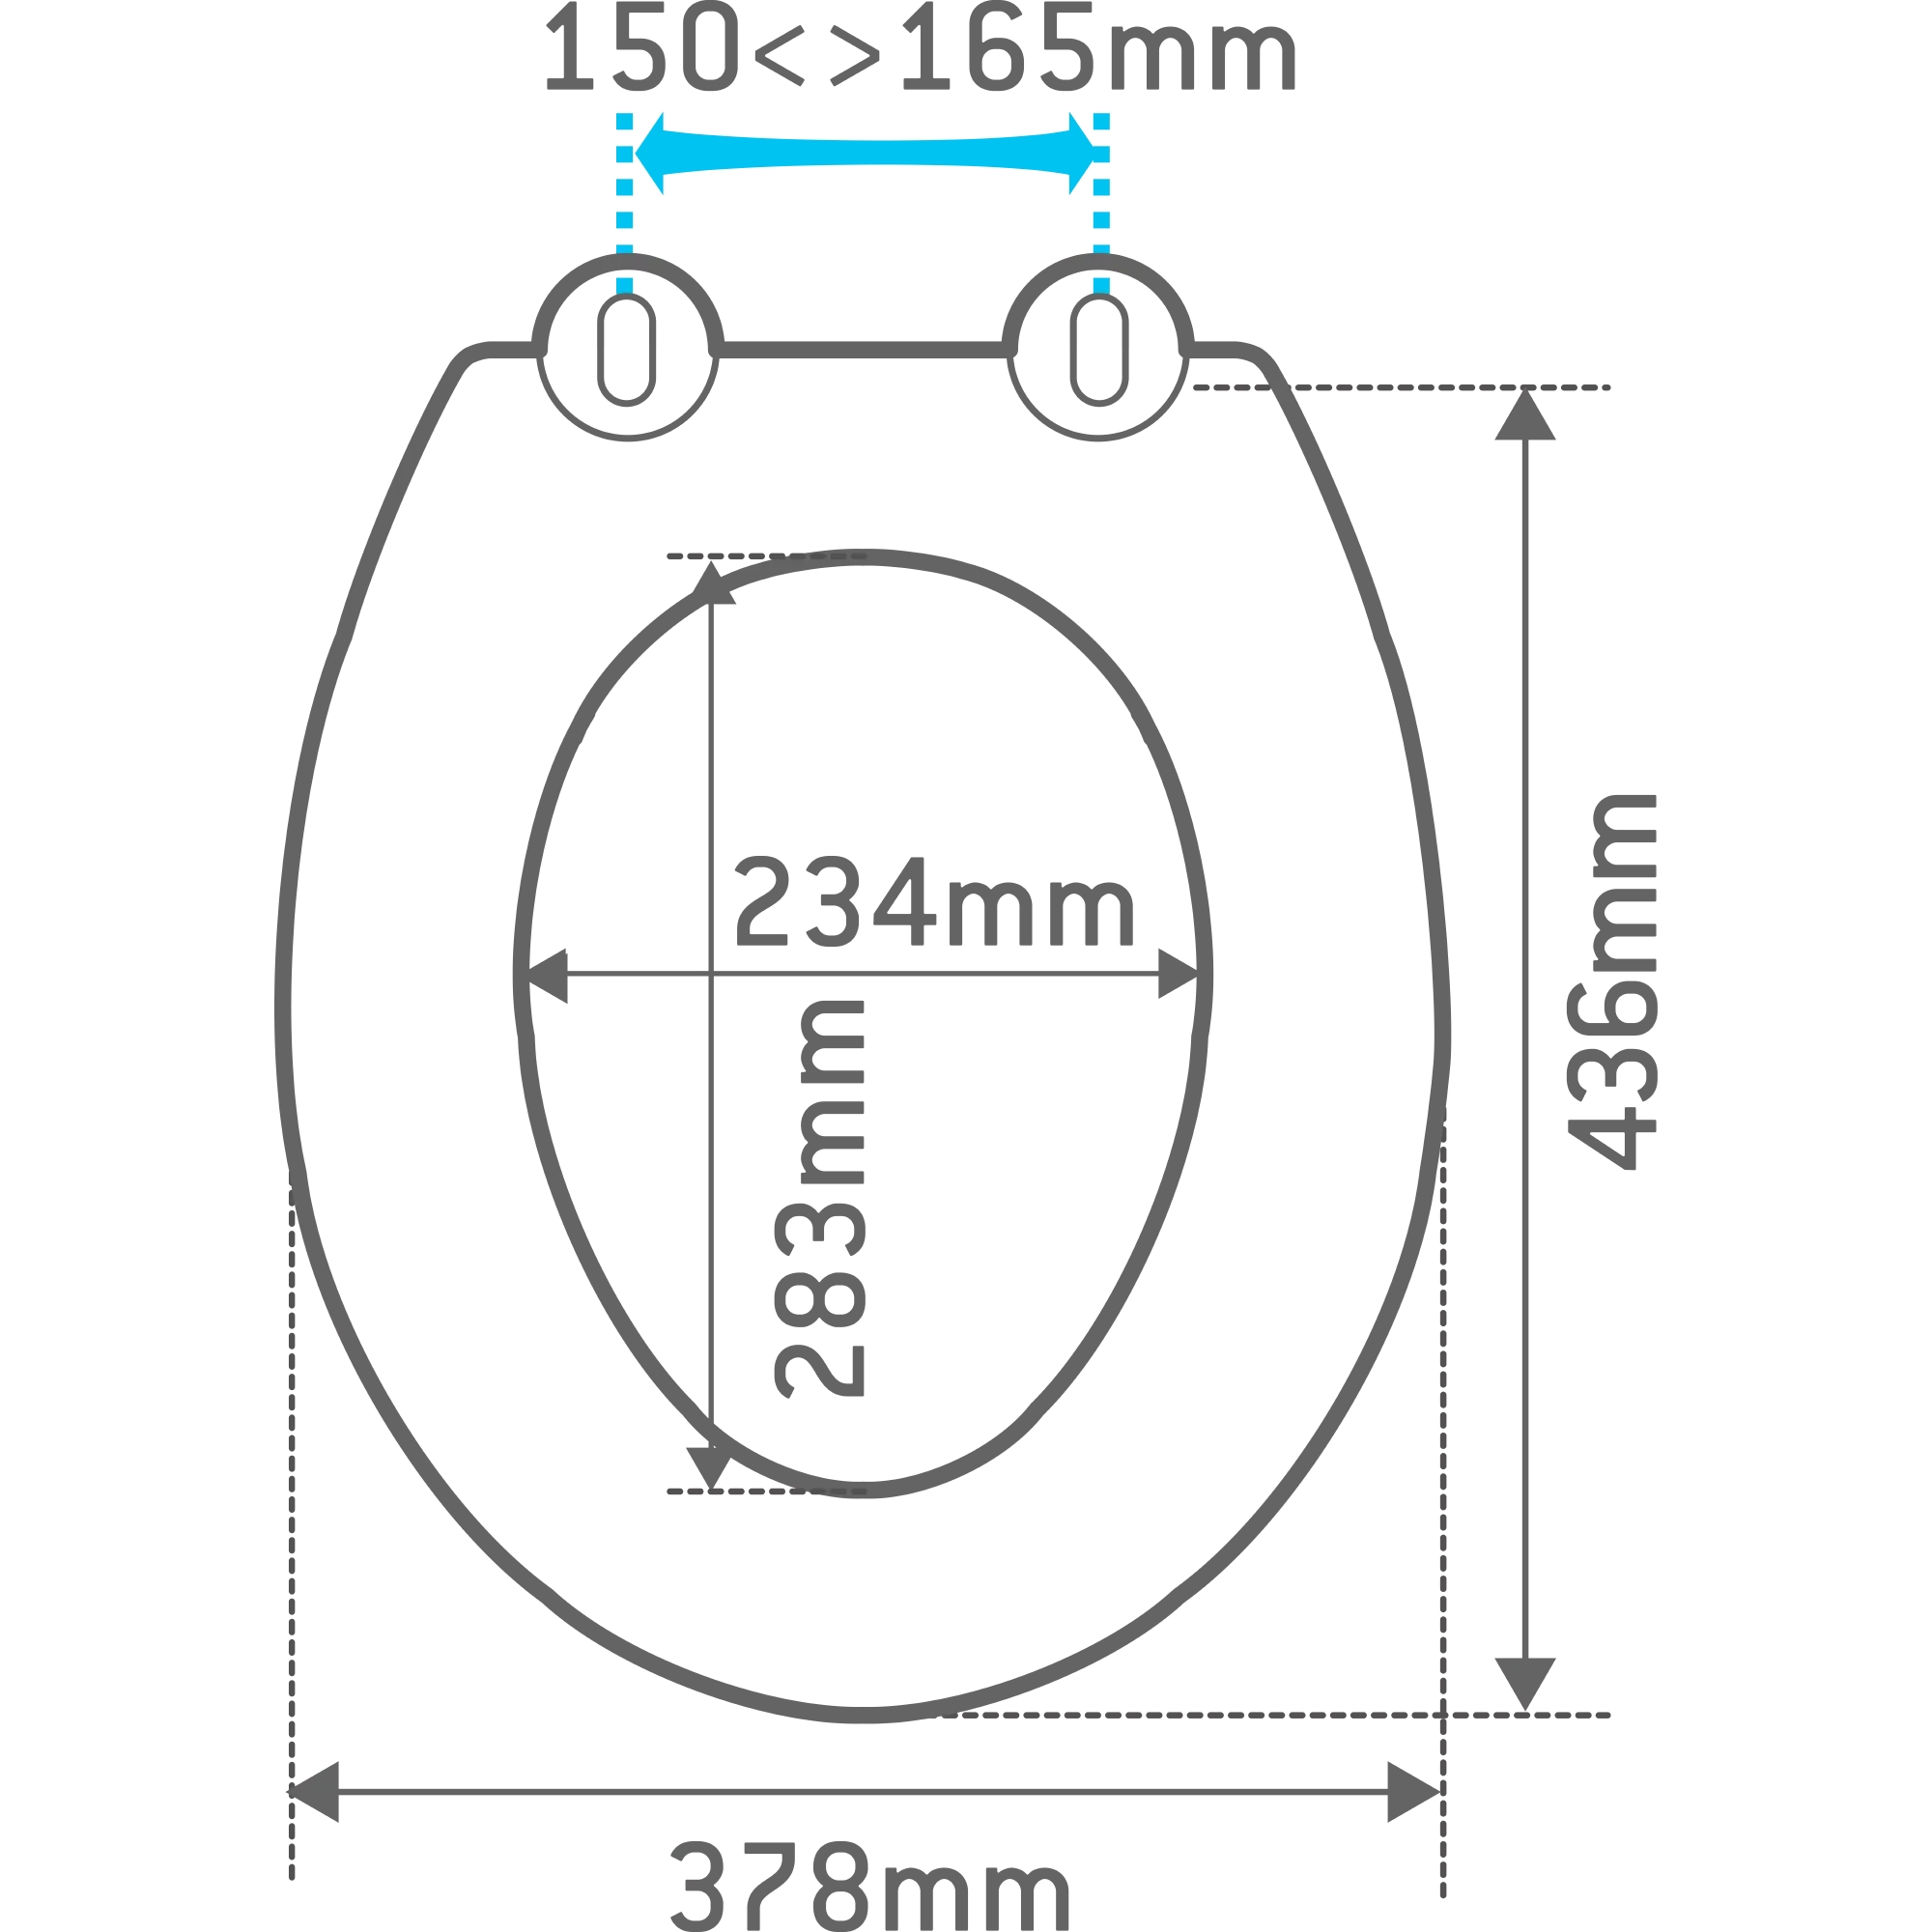 Copriwater ovale Universale Easy SENSEA duroplast bianco - 3